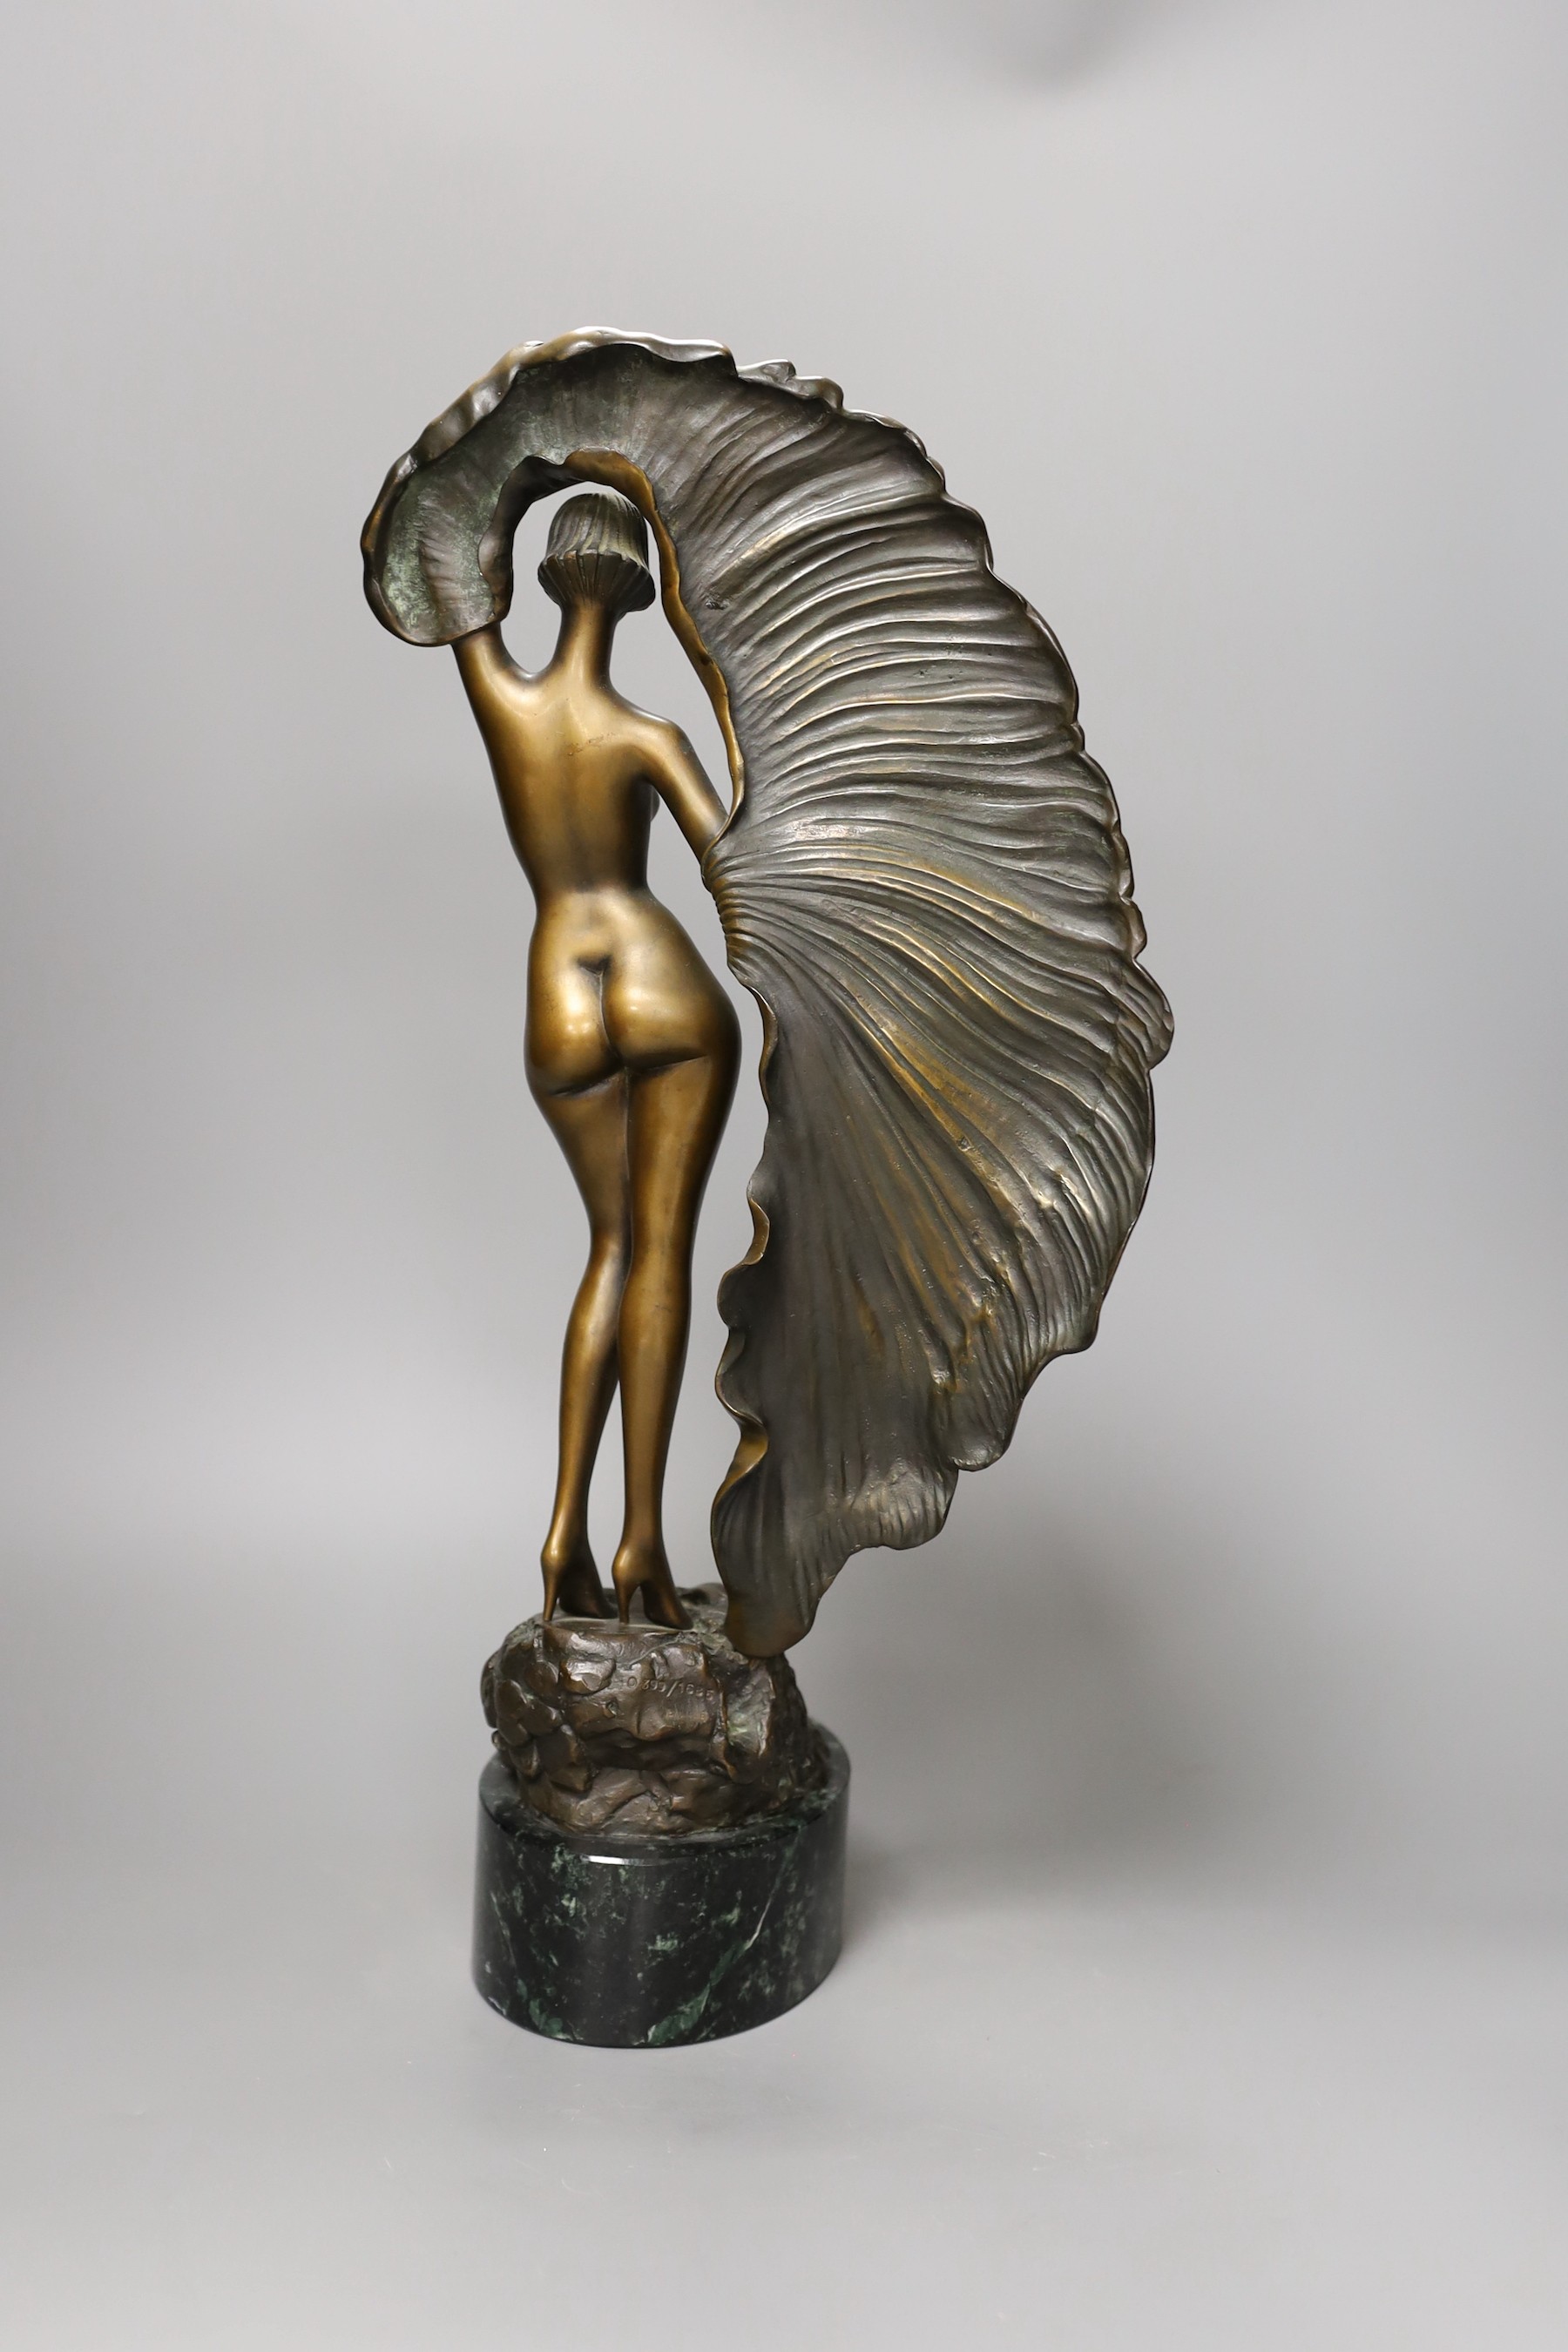 An Erte limited edition bronze dancer on marble plinth, 43cm tall